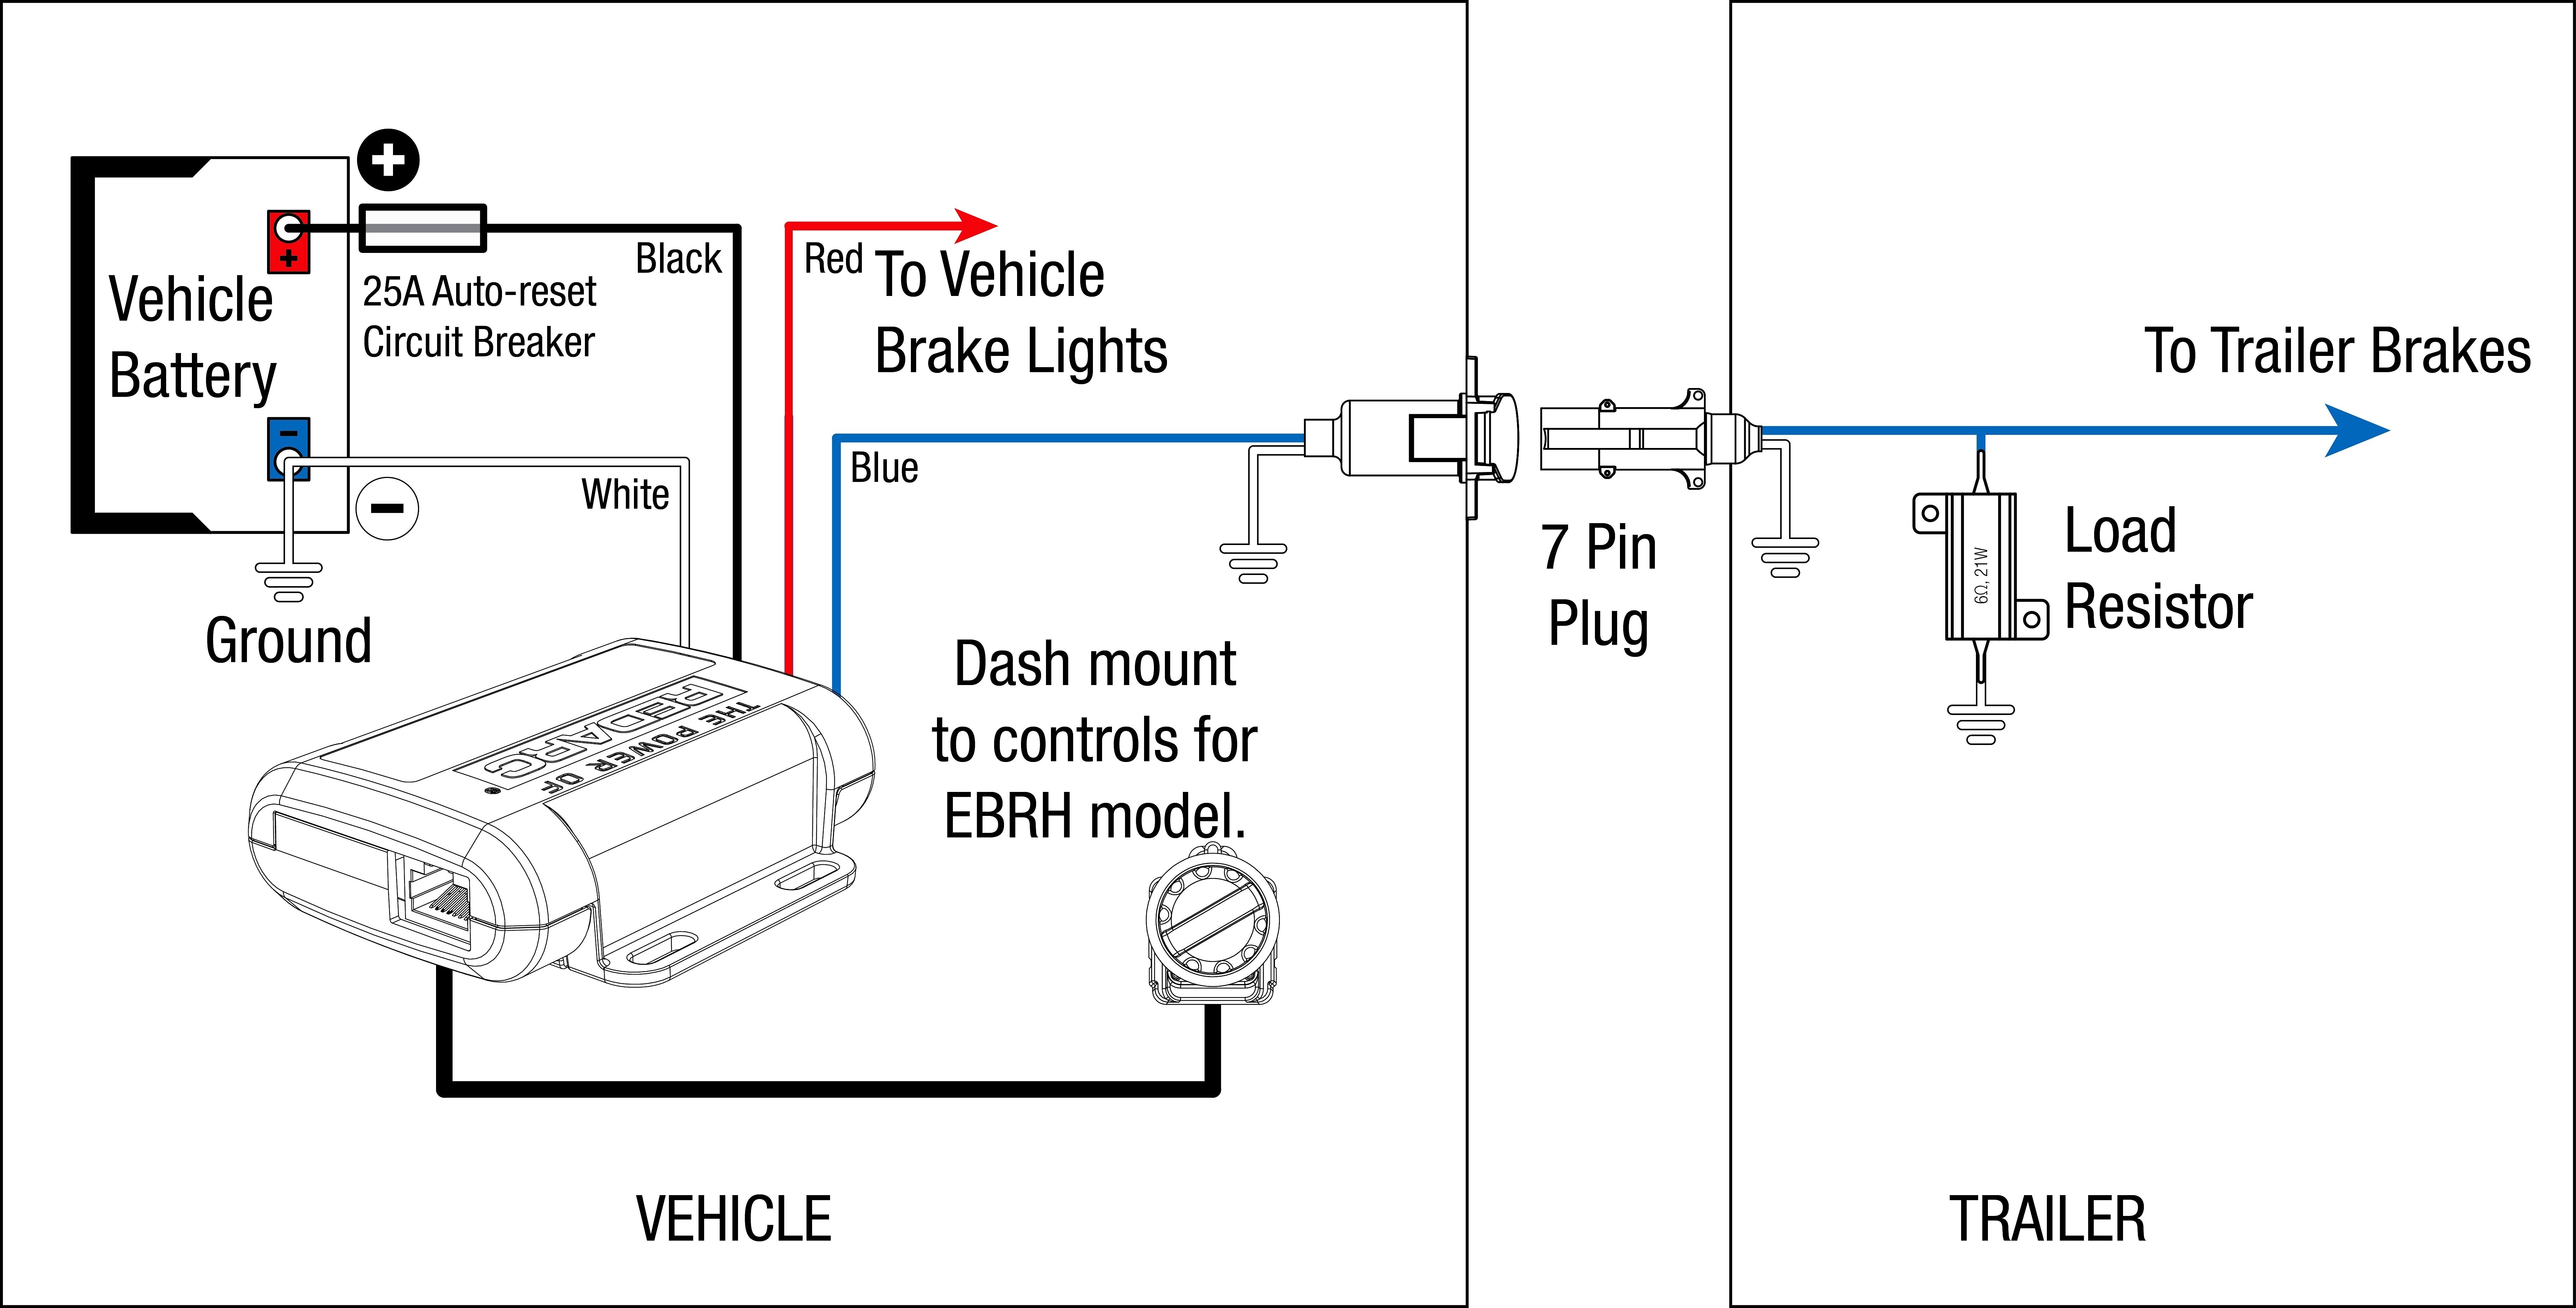 Chevrolet Silverado Trailer Wiring Harnes - Wiring Diagram 2007 Chevy Silverado Trailer Brake Controller Wiring